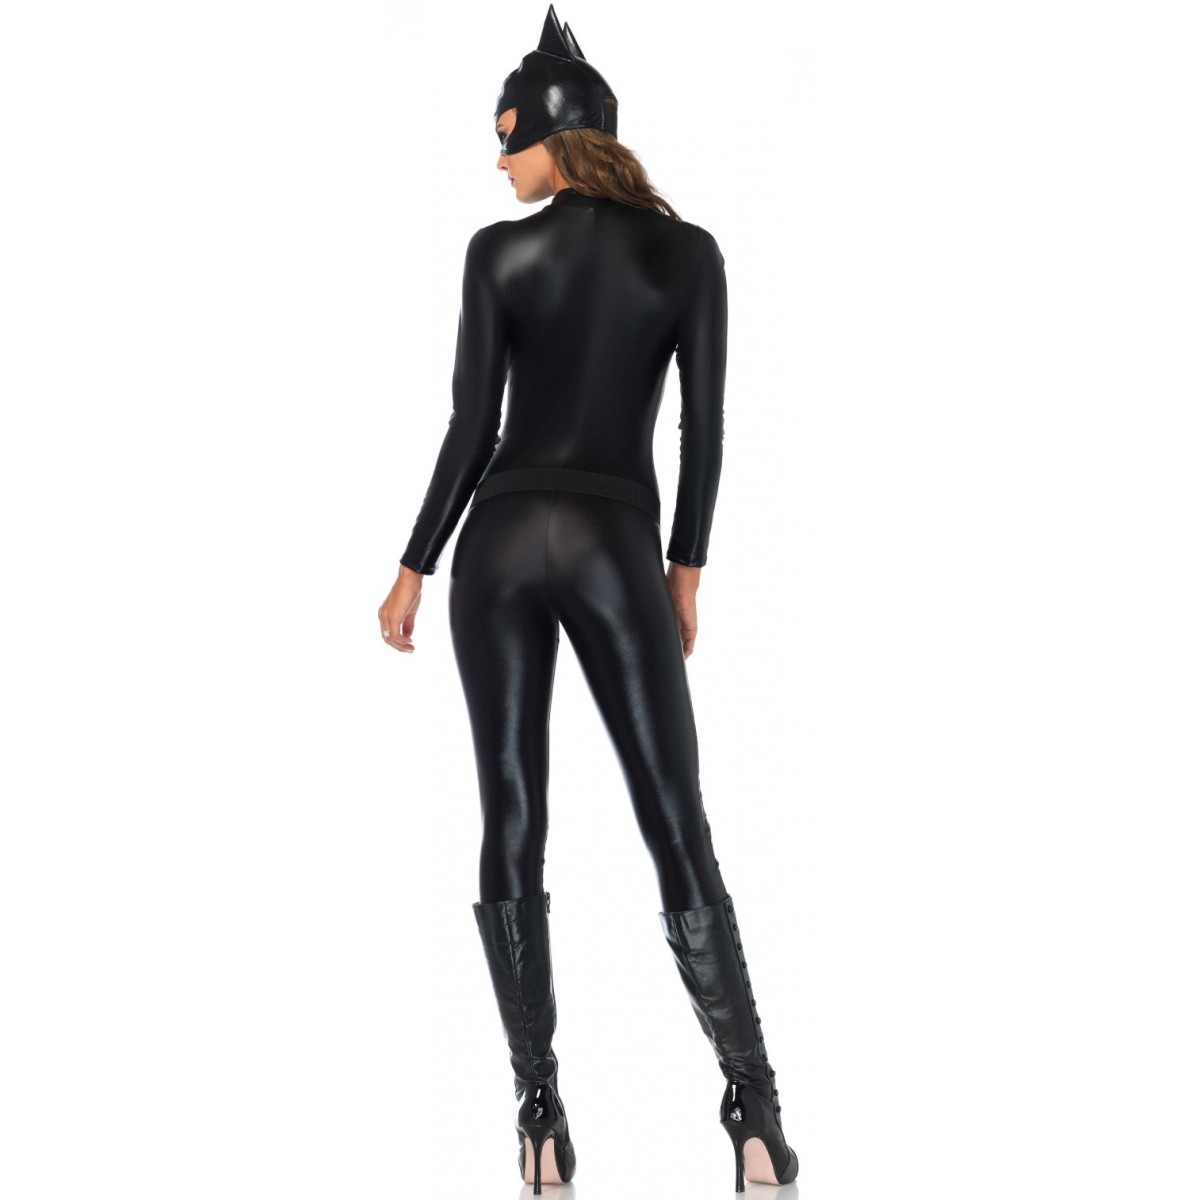 Captivating Crime Fighter Womens Halloween Costume | Batgirl Costume